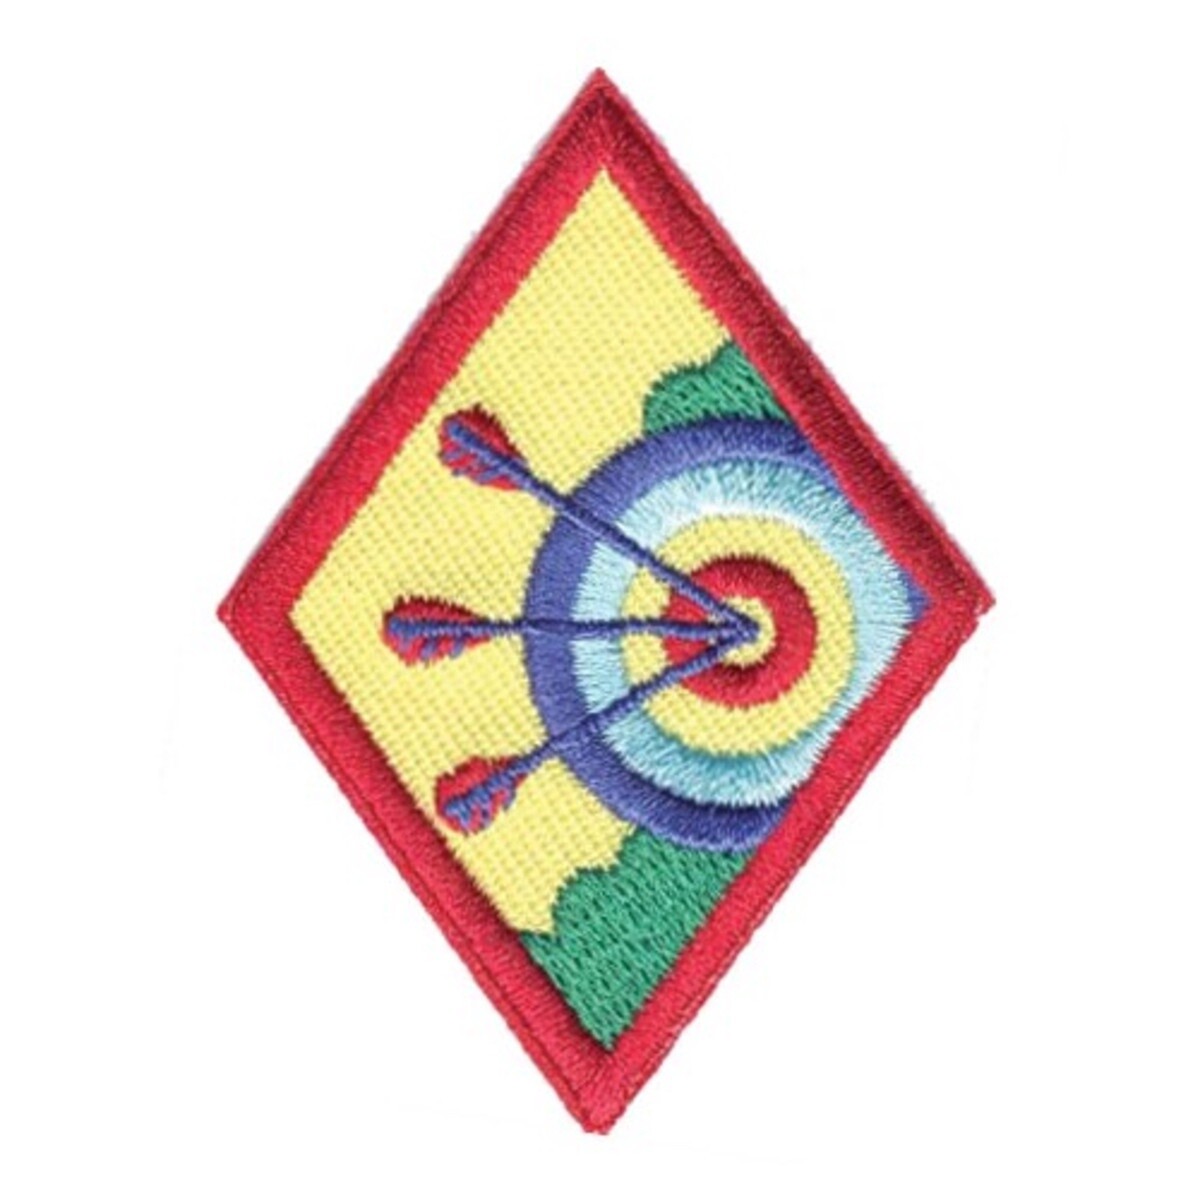 Cadette Archery Badge